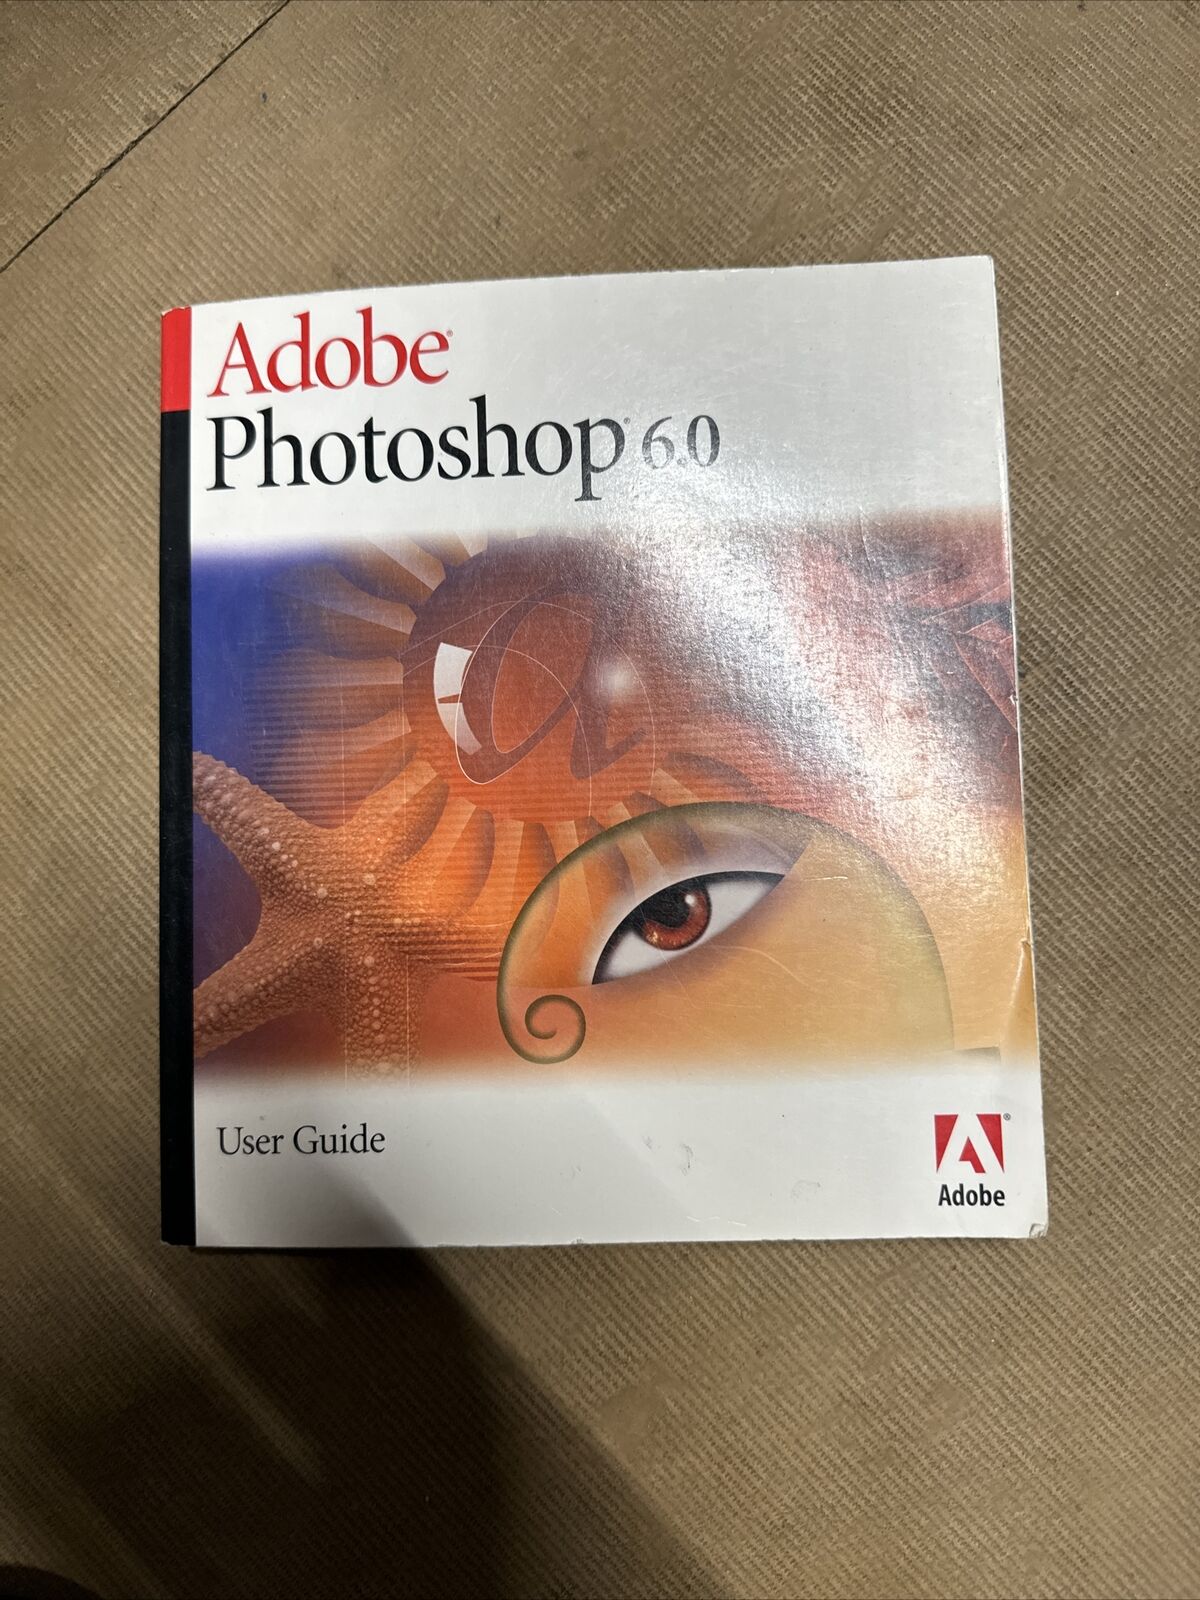 Adobe Photoshop 6.0 Full Retail Version Windows Book Only